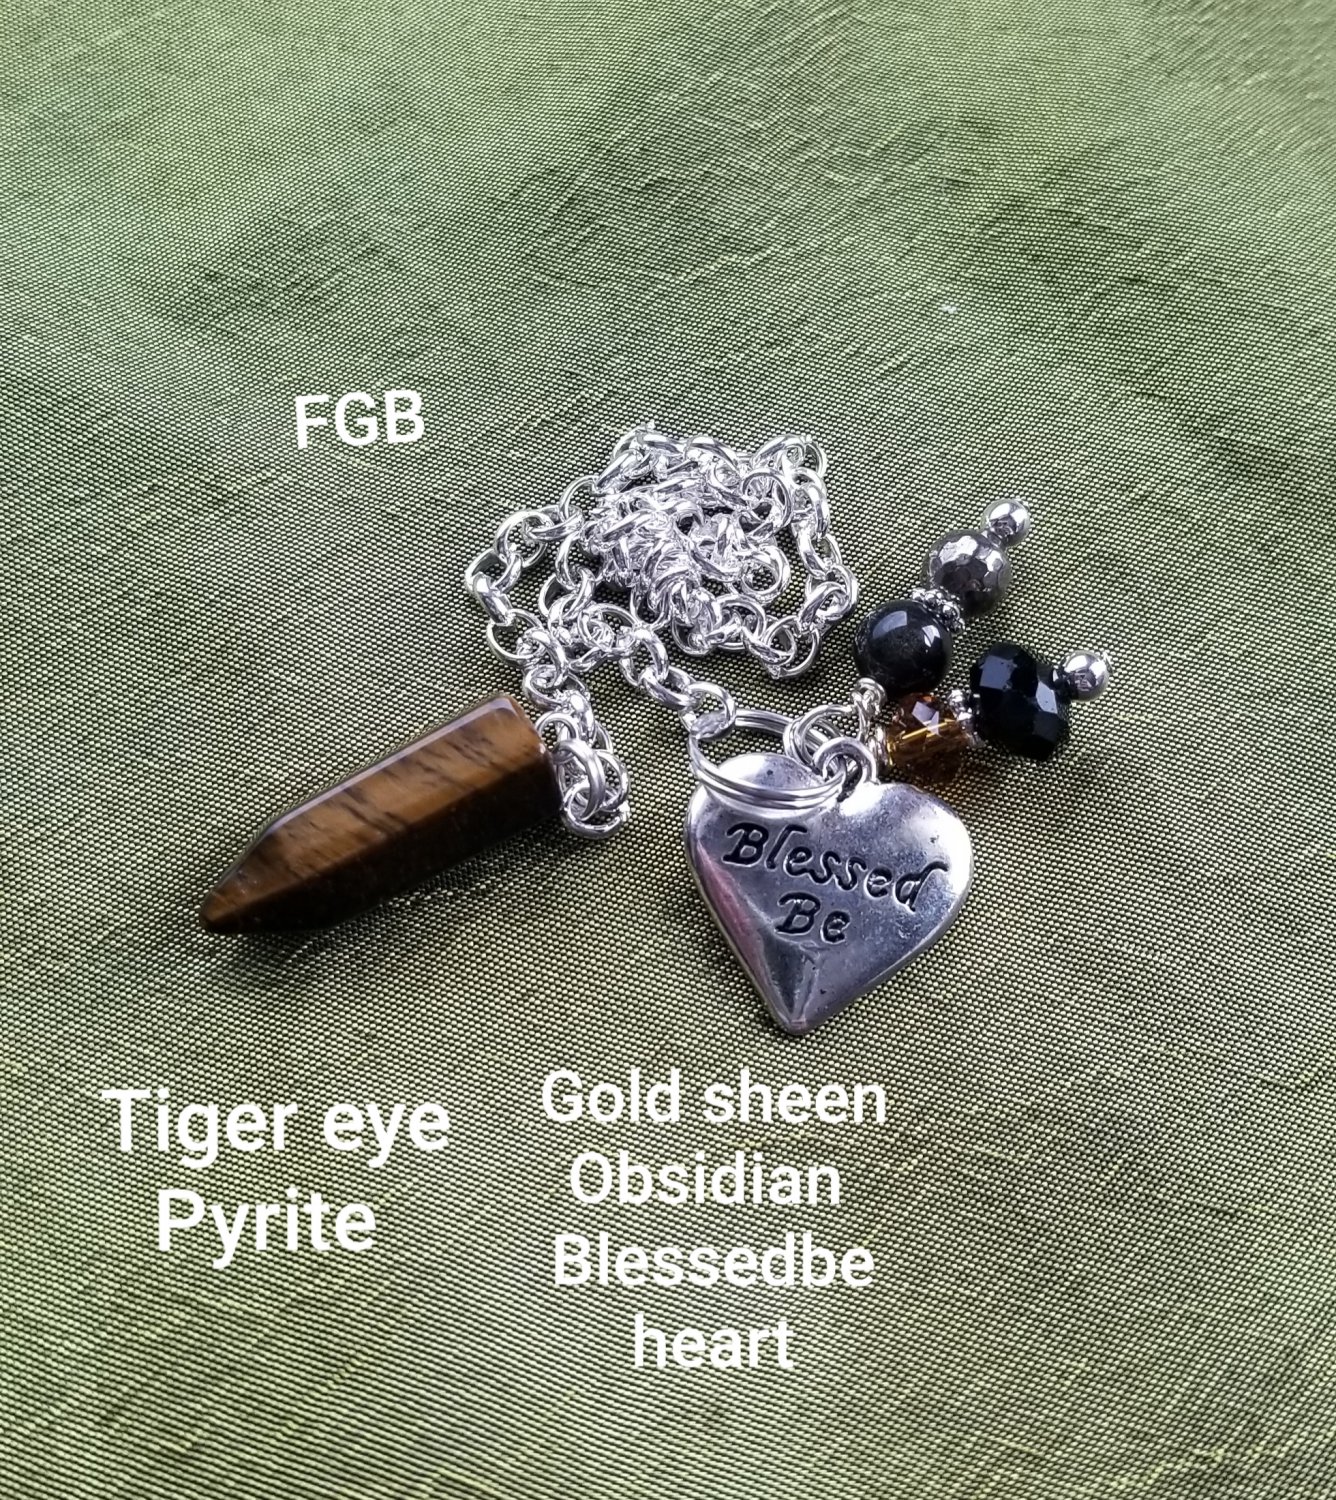 Tigereye Blessedbe pendulum 2b